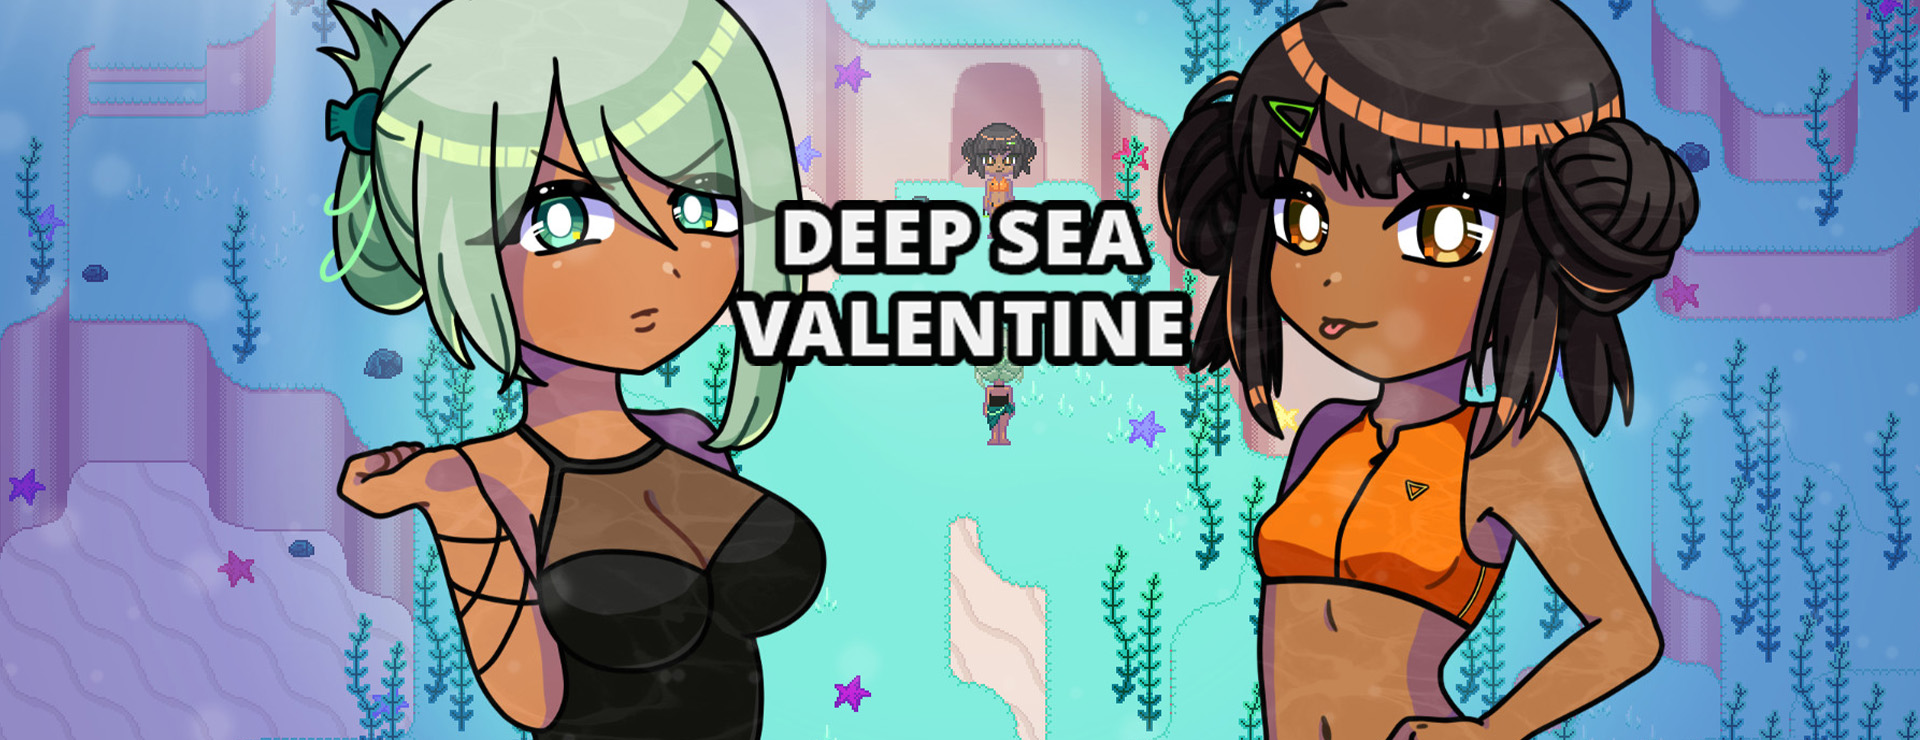 Deep Sea Valentine - ビジュアルノベル ゲーム